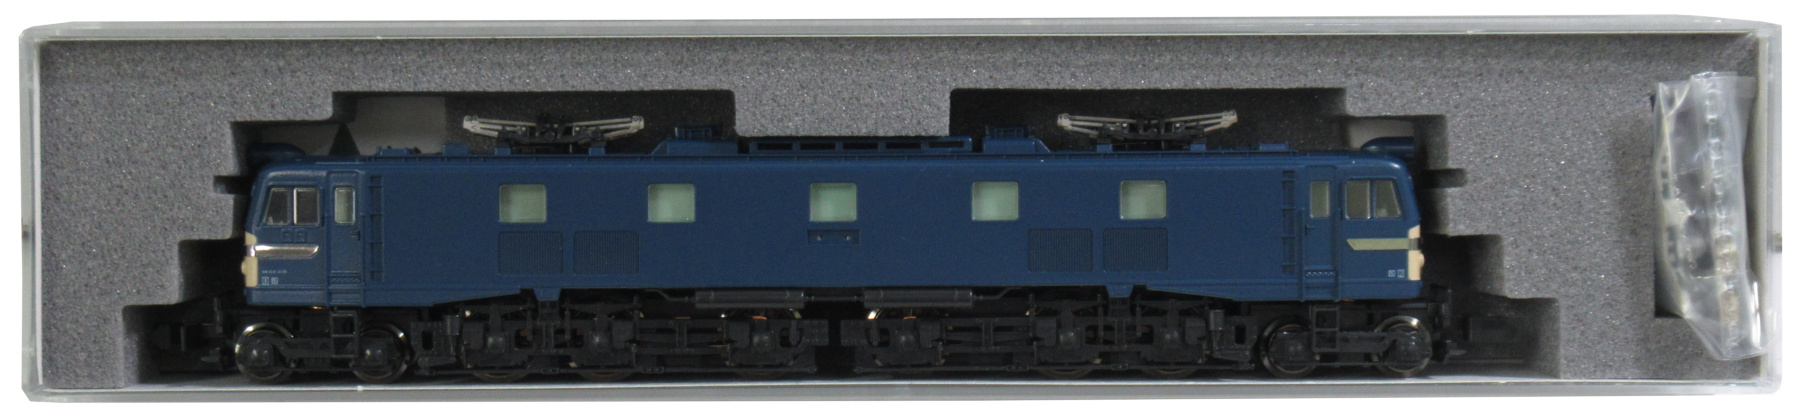 3020-1 EF58 後期形 大窓 ブルー